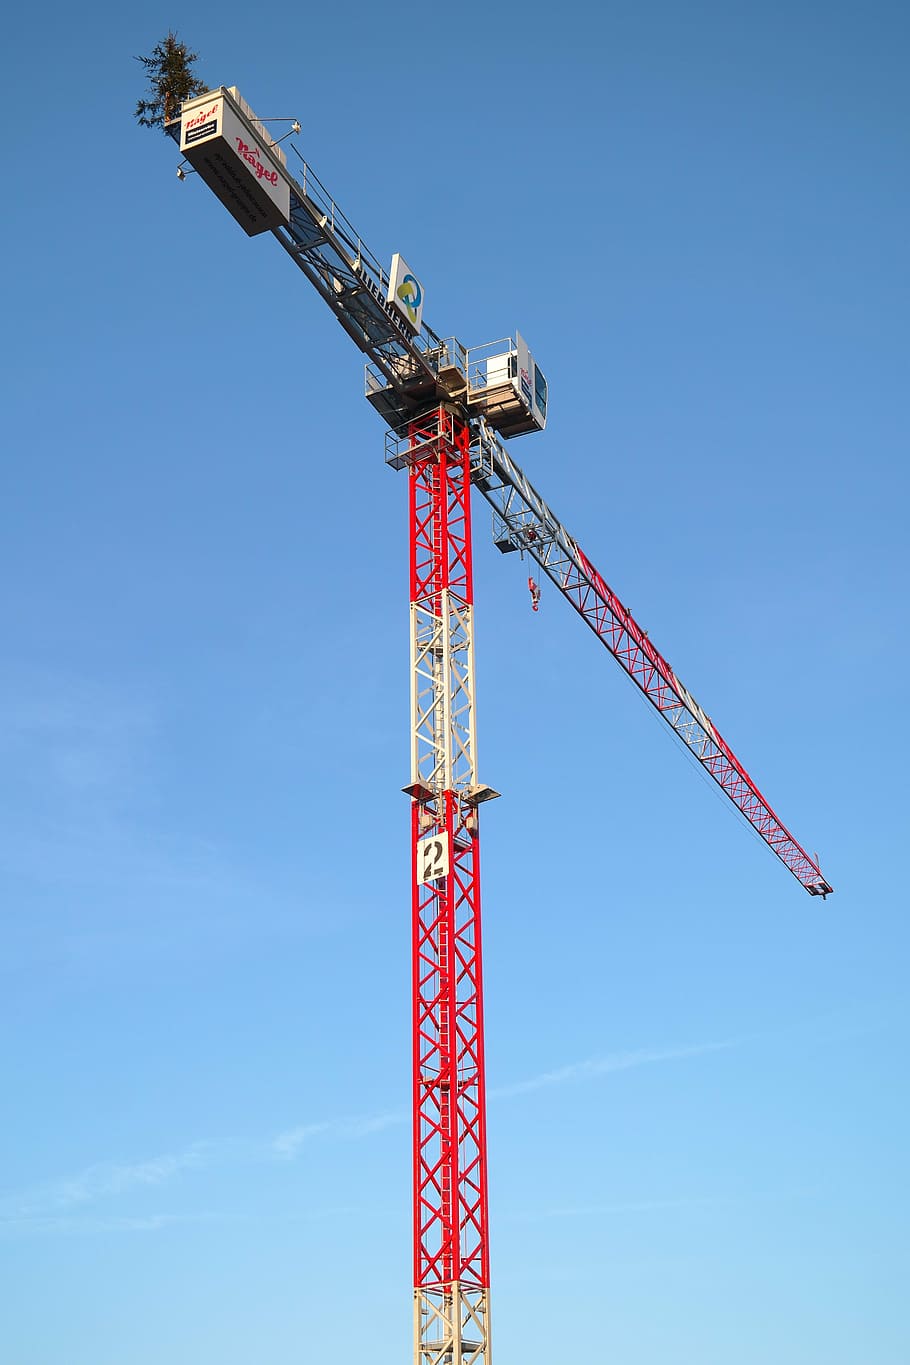 baukran, crane, build, site, sky, construction work, lattice boom crane, crane boom, boom, christmas tree